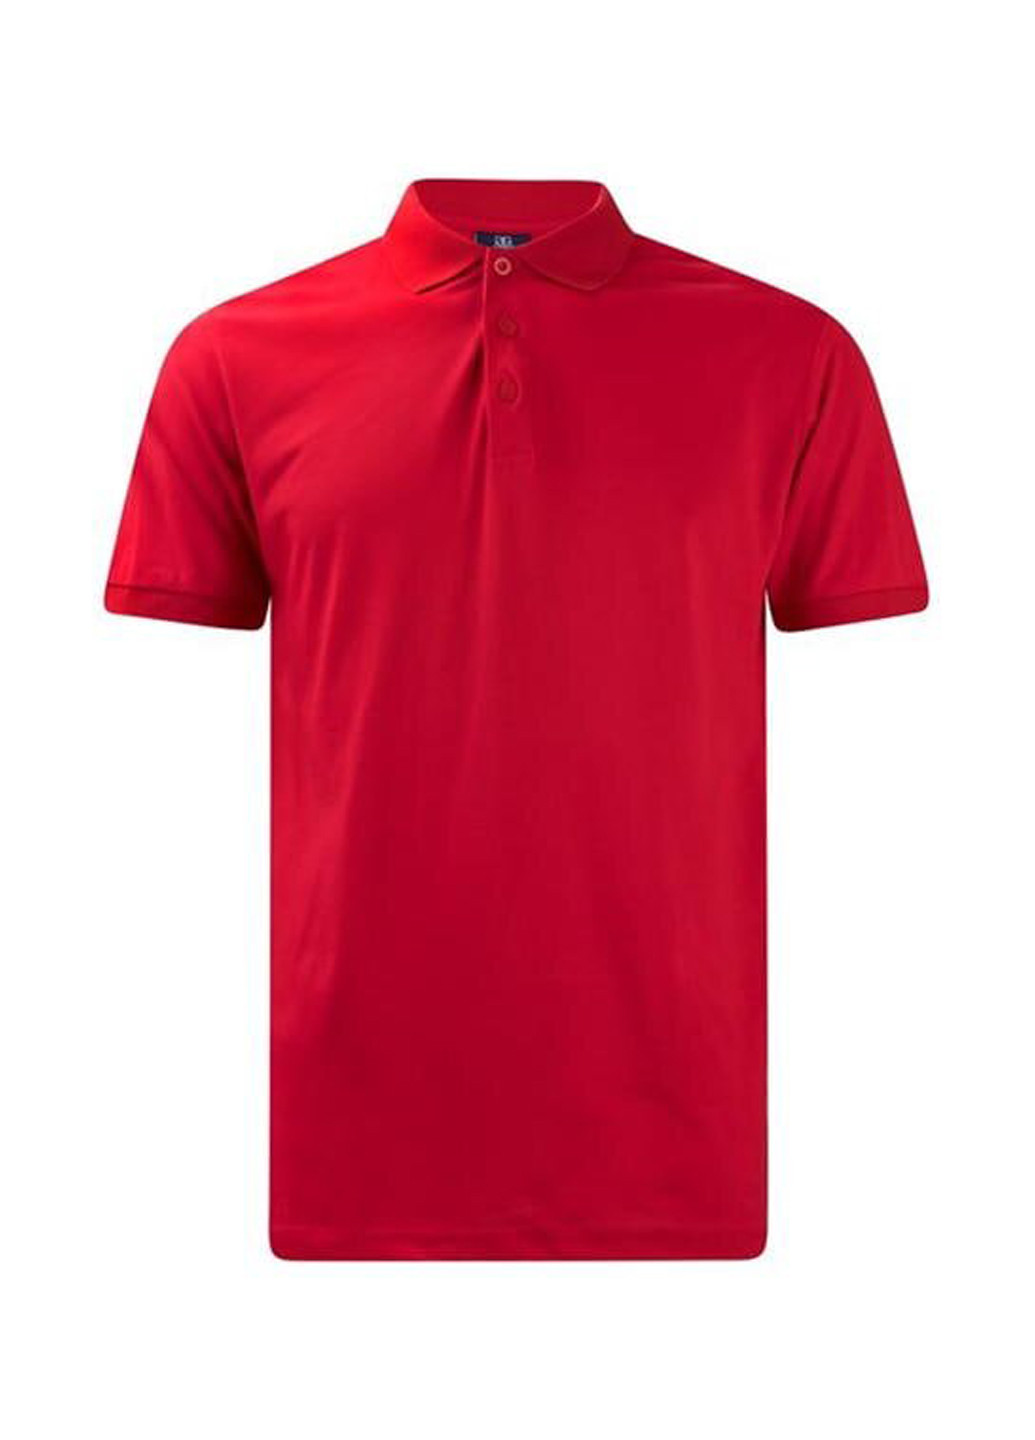 Красная футболка-поло для мужчин Giorgio однотонная